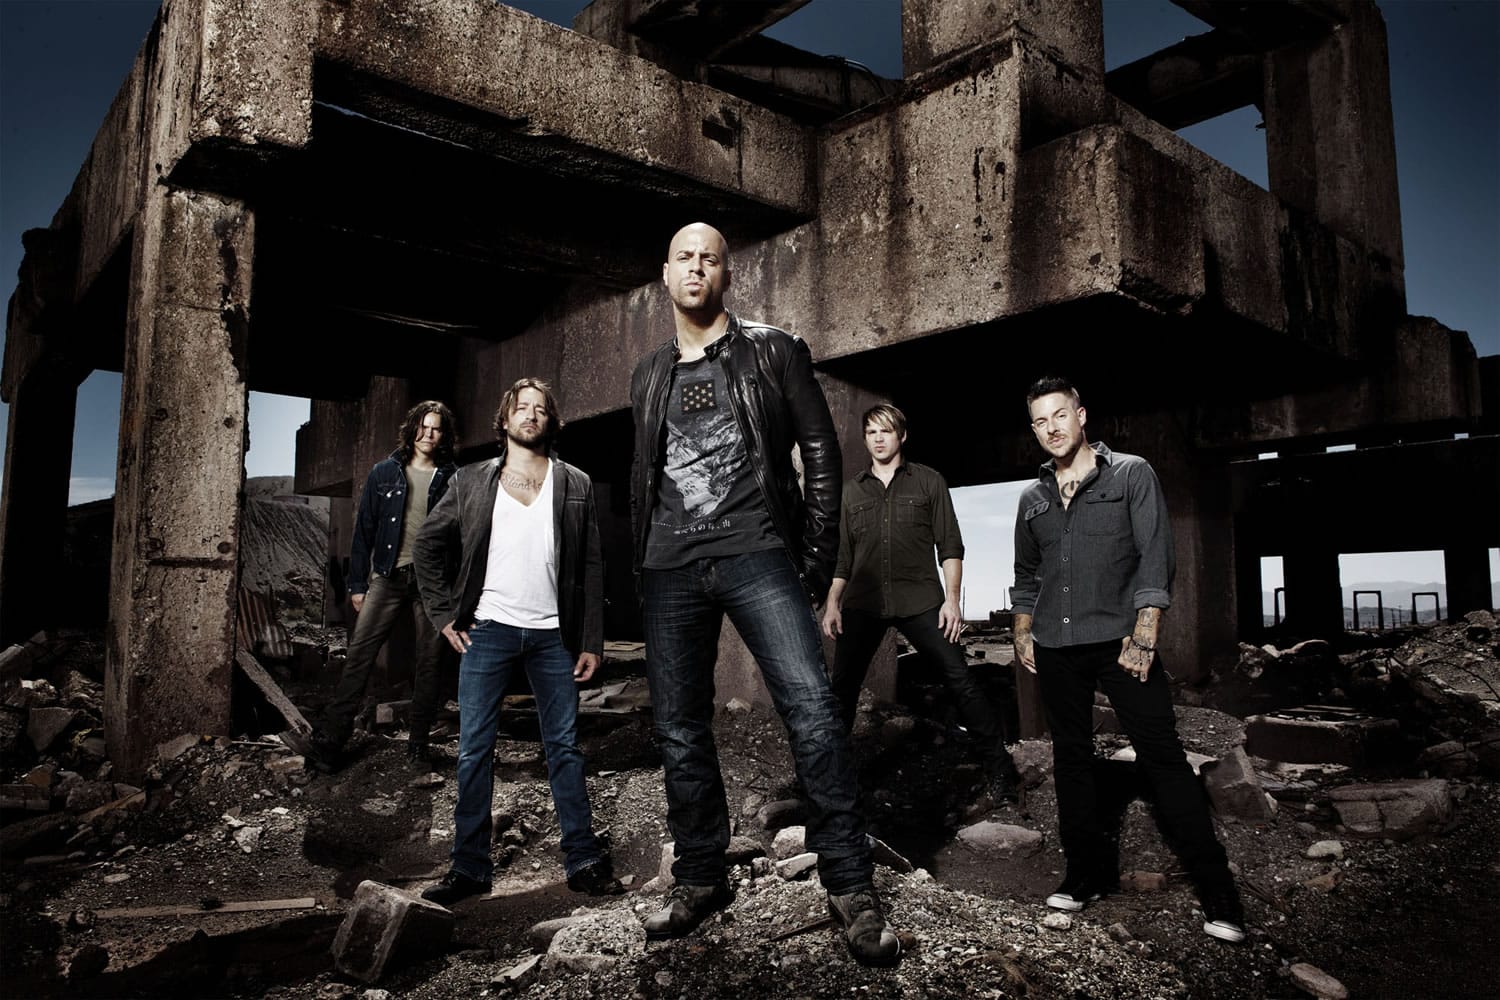 Rock band Daughtry, fronted by American Idol season 5 finalist Chris Daughtry, will perform June 2, 2012 at Keller Auditorium in Portland.